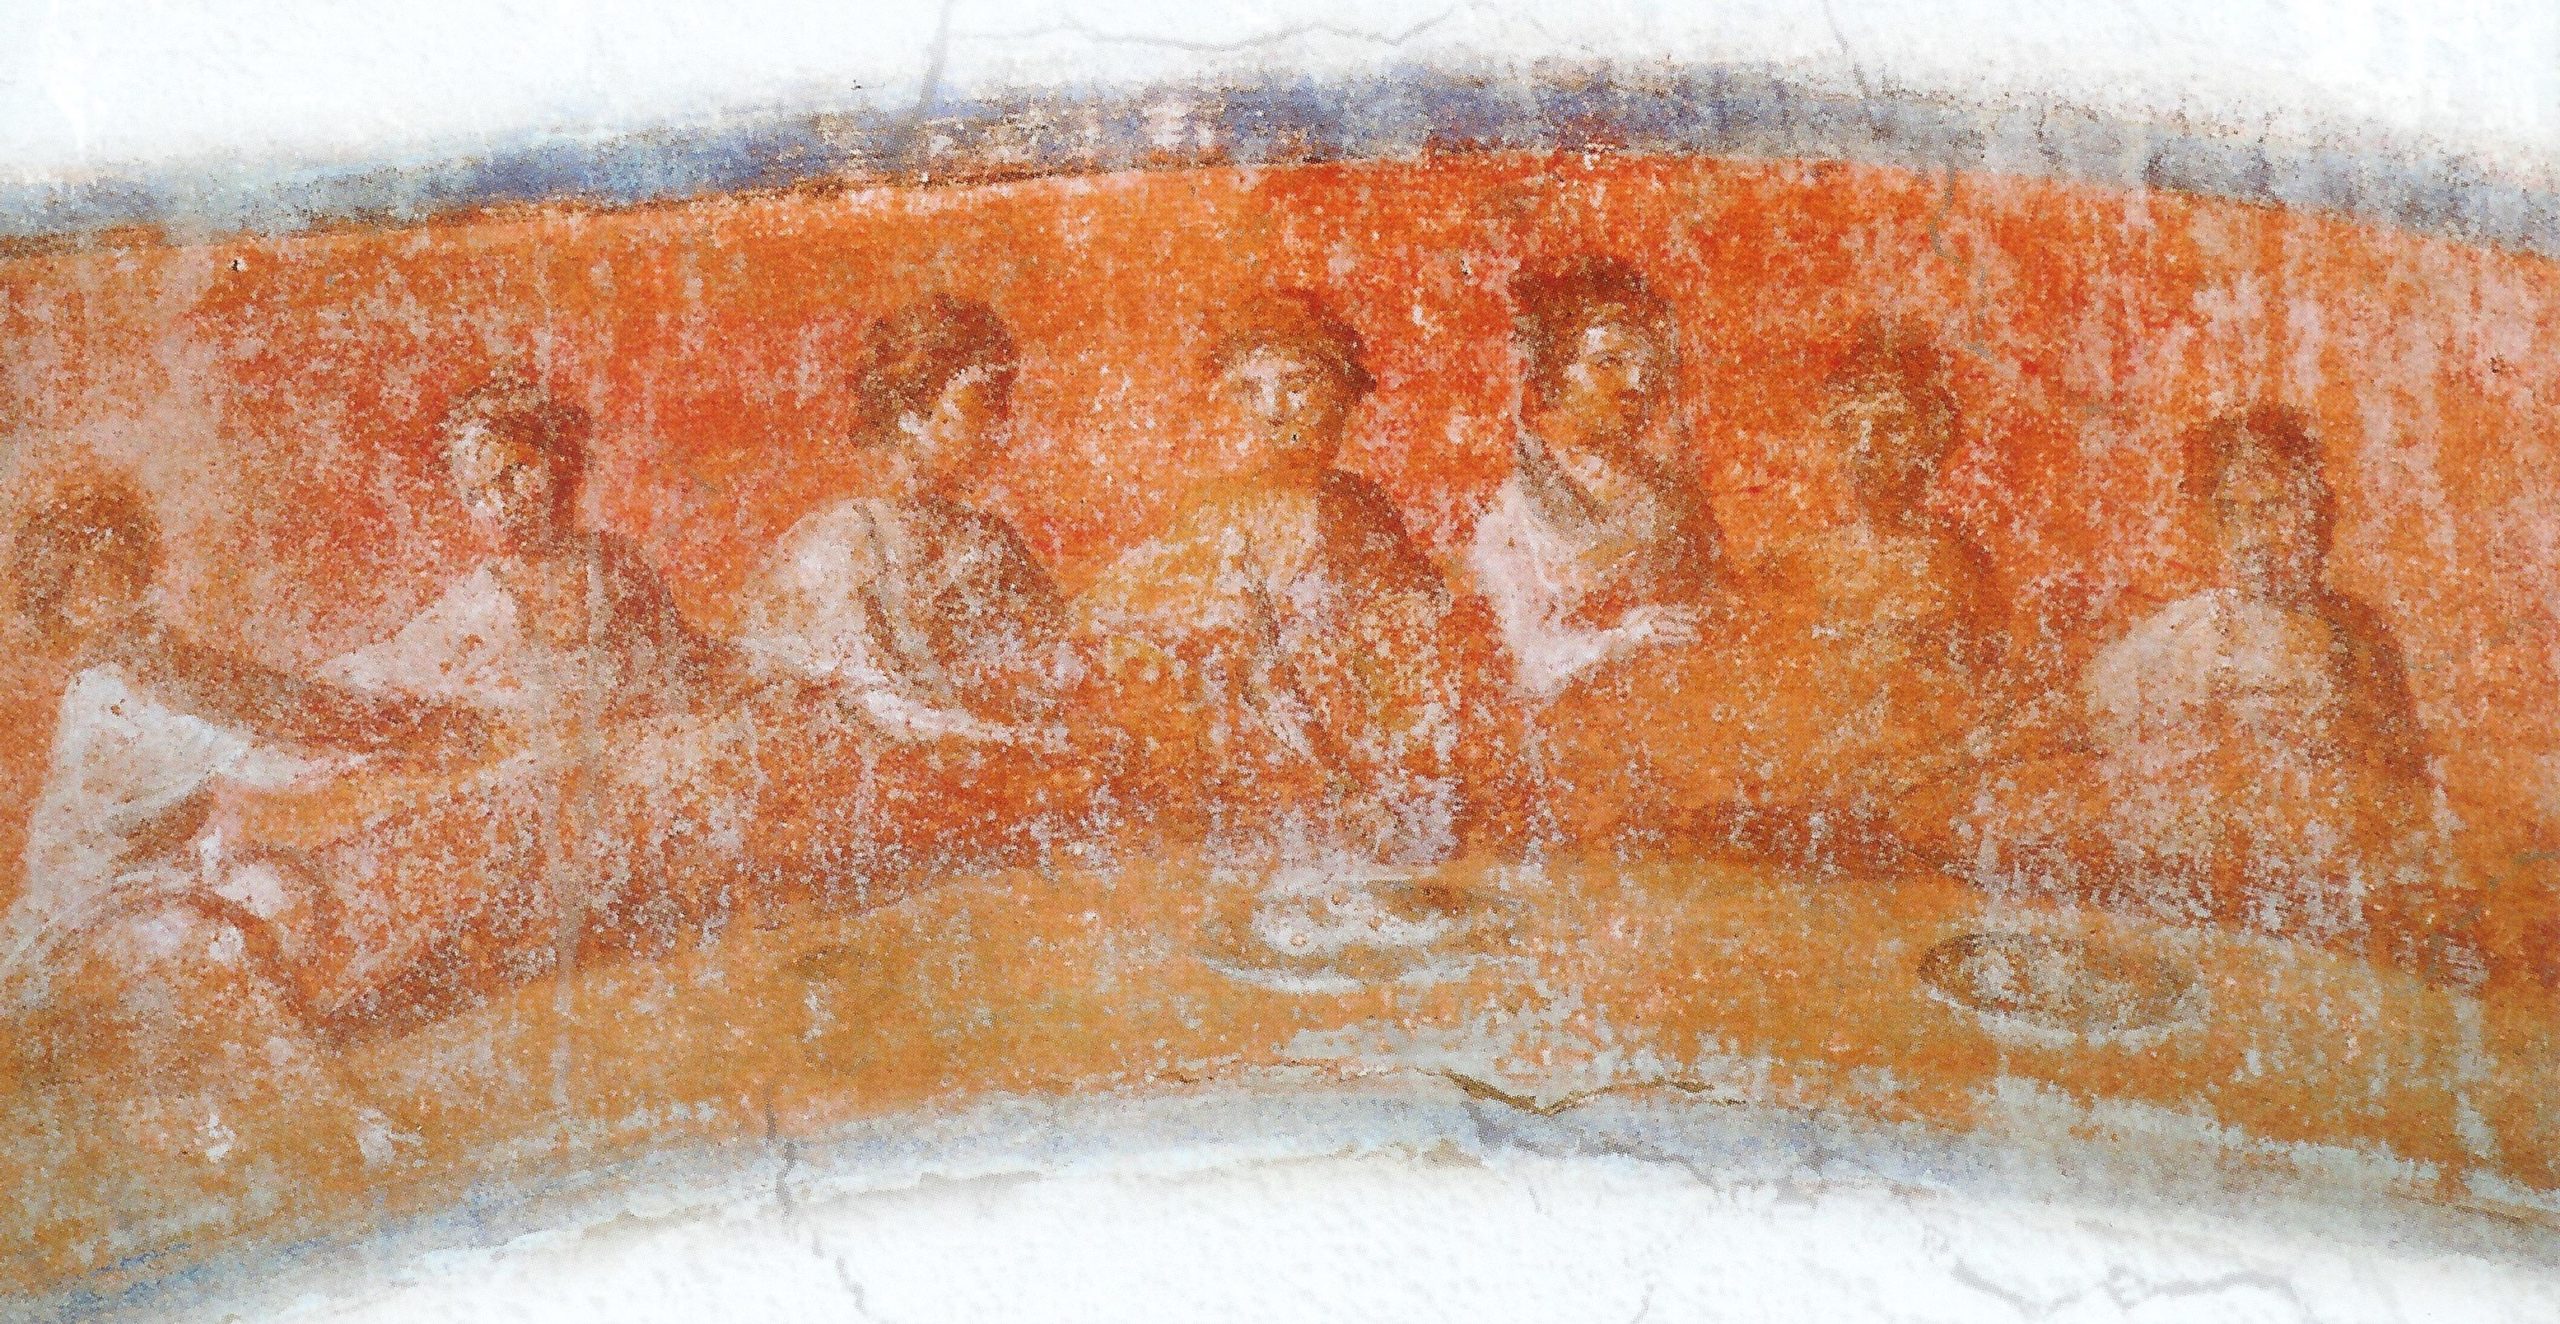 Catacombe_di_Priscilla, Rome - Fresco of a Christian Agape feast painting